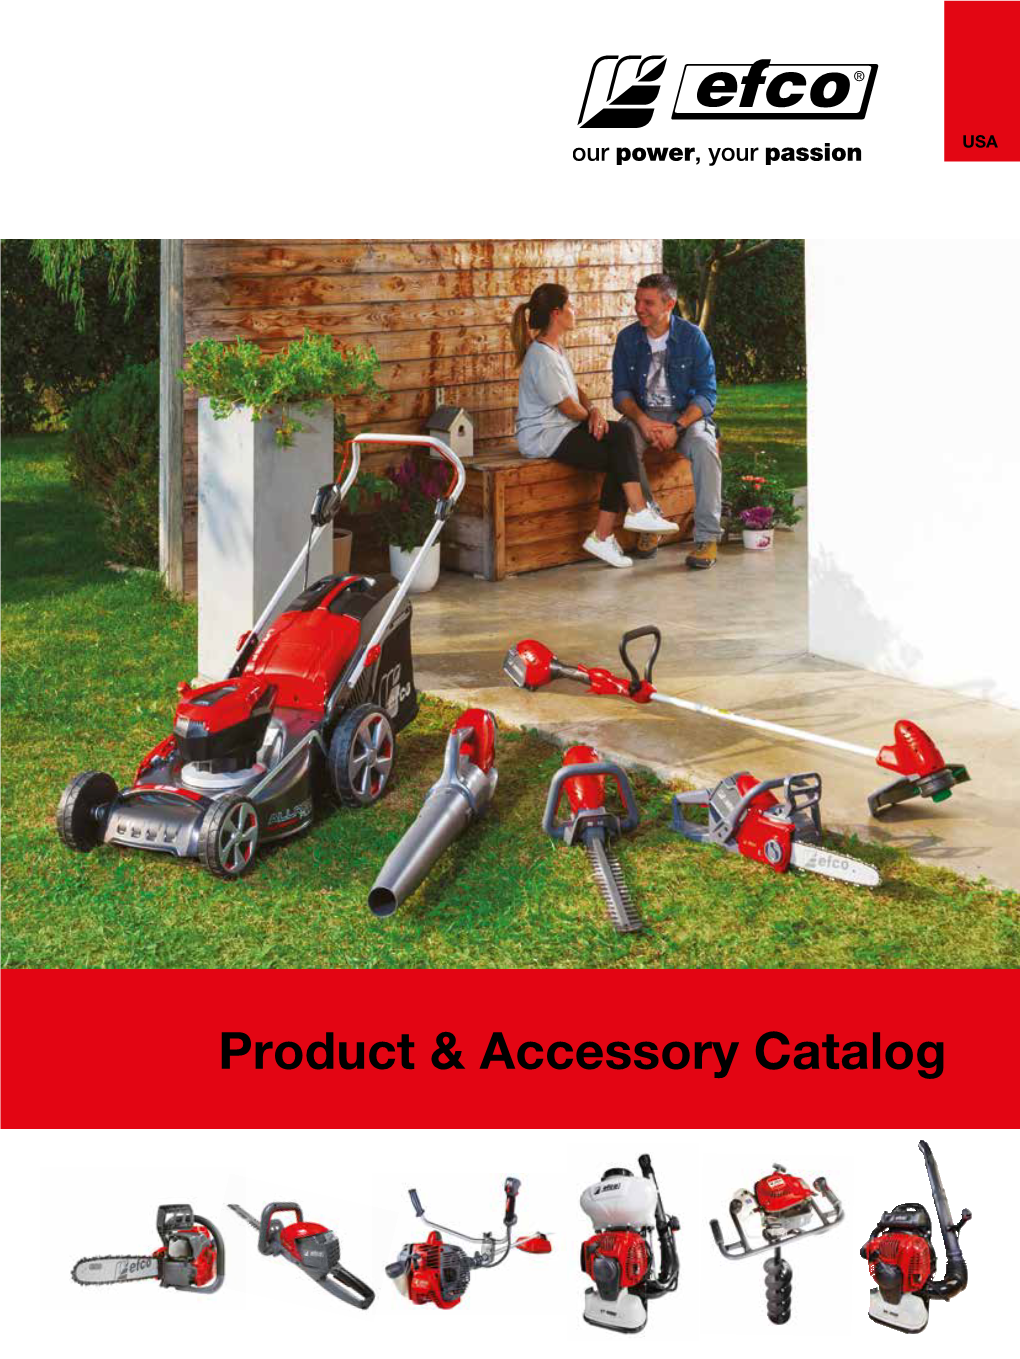 Product & Accessory Catalog